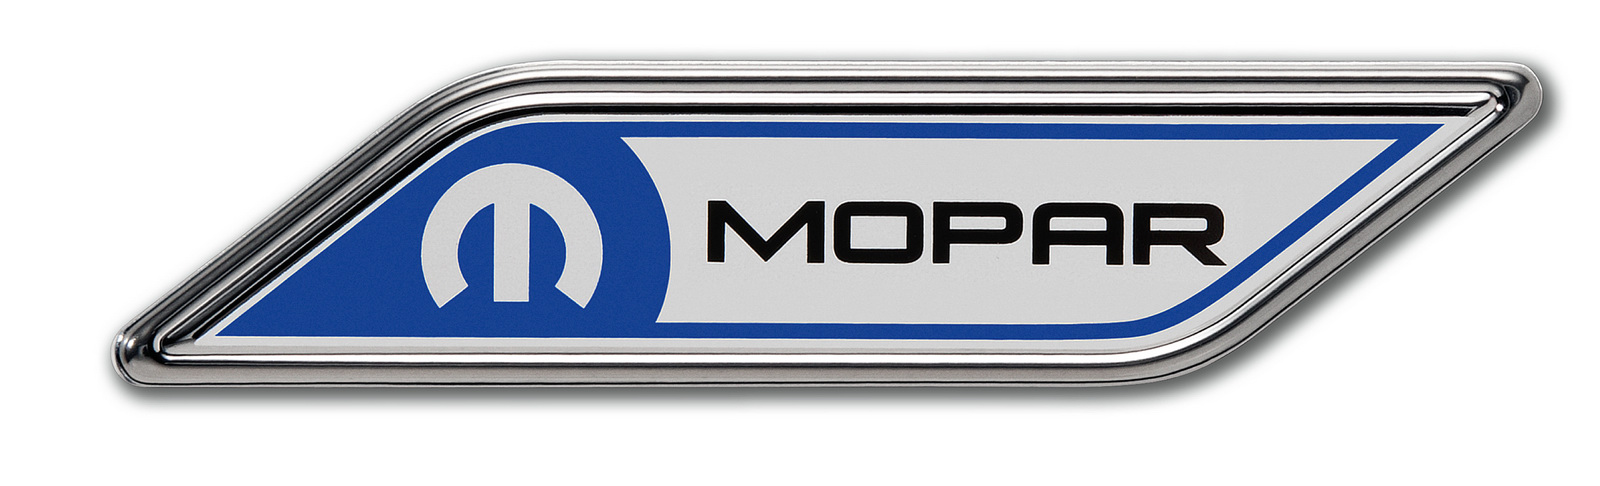 MOPAR Store Dachaufkleber Fiat Monogram